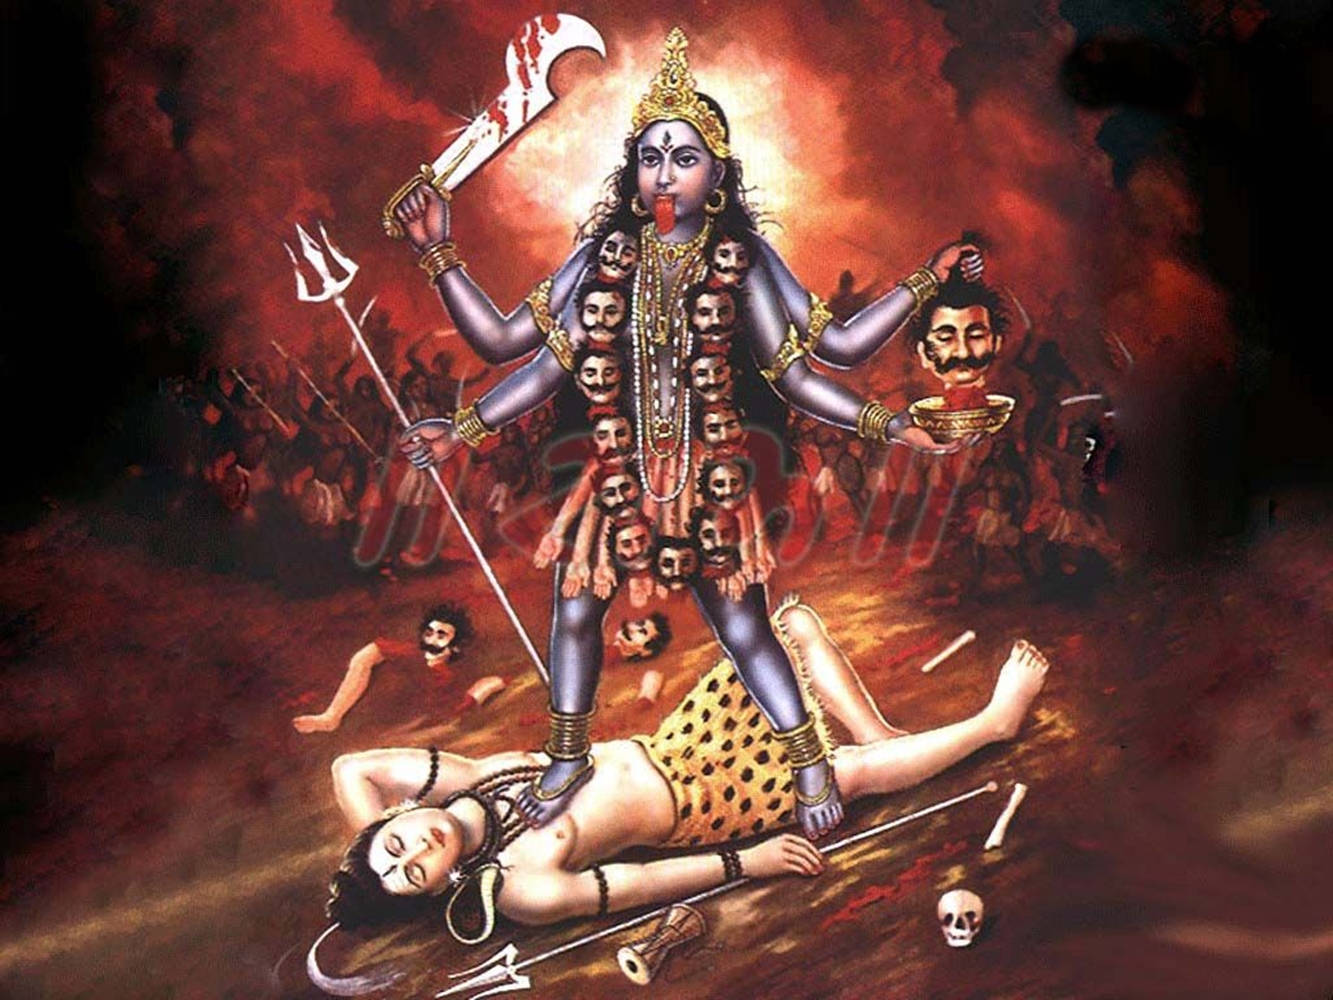 Maa Kali On Shiva Red Aesthetic With People